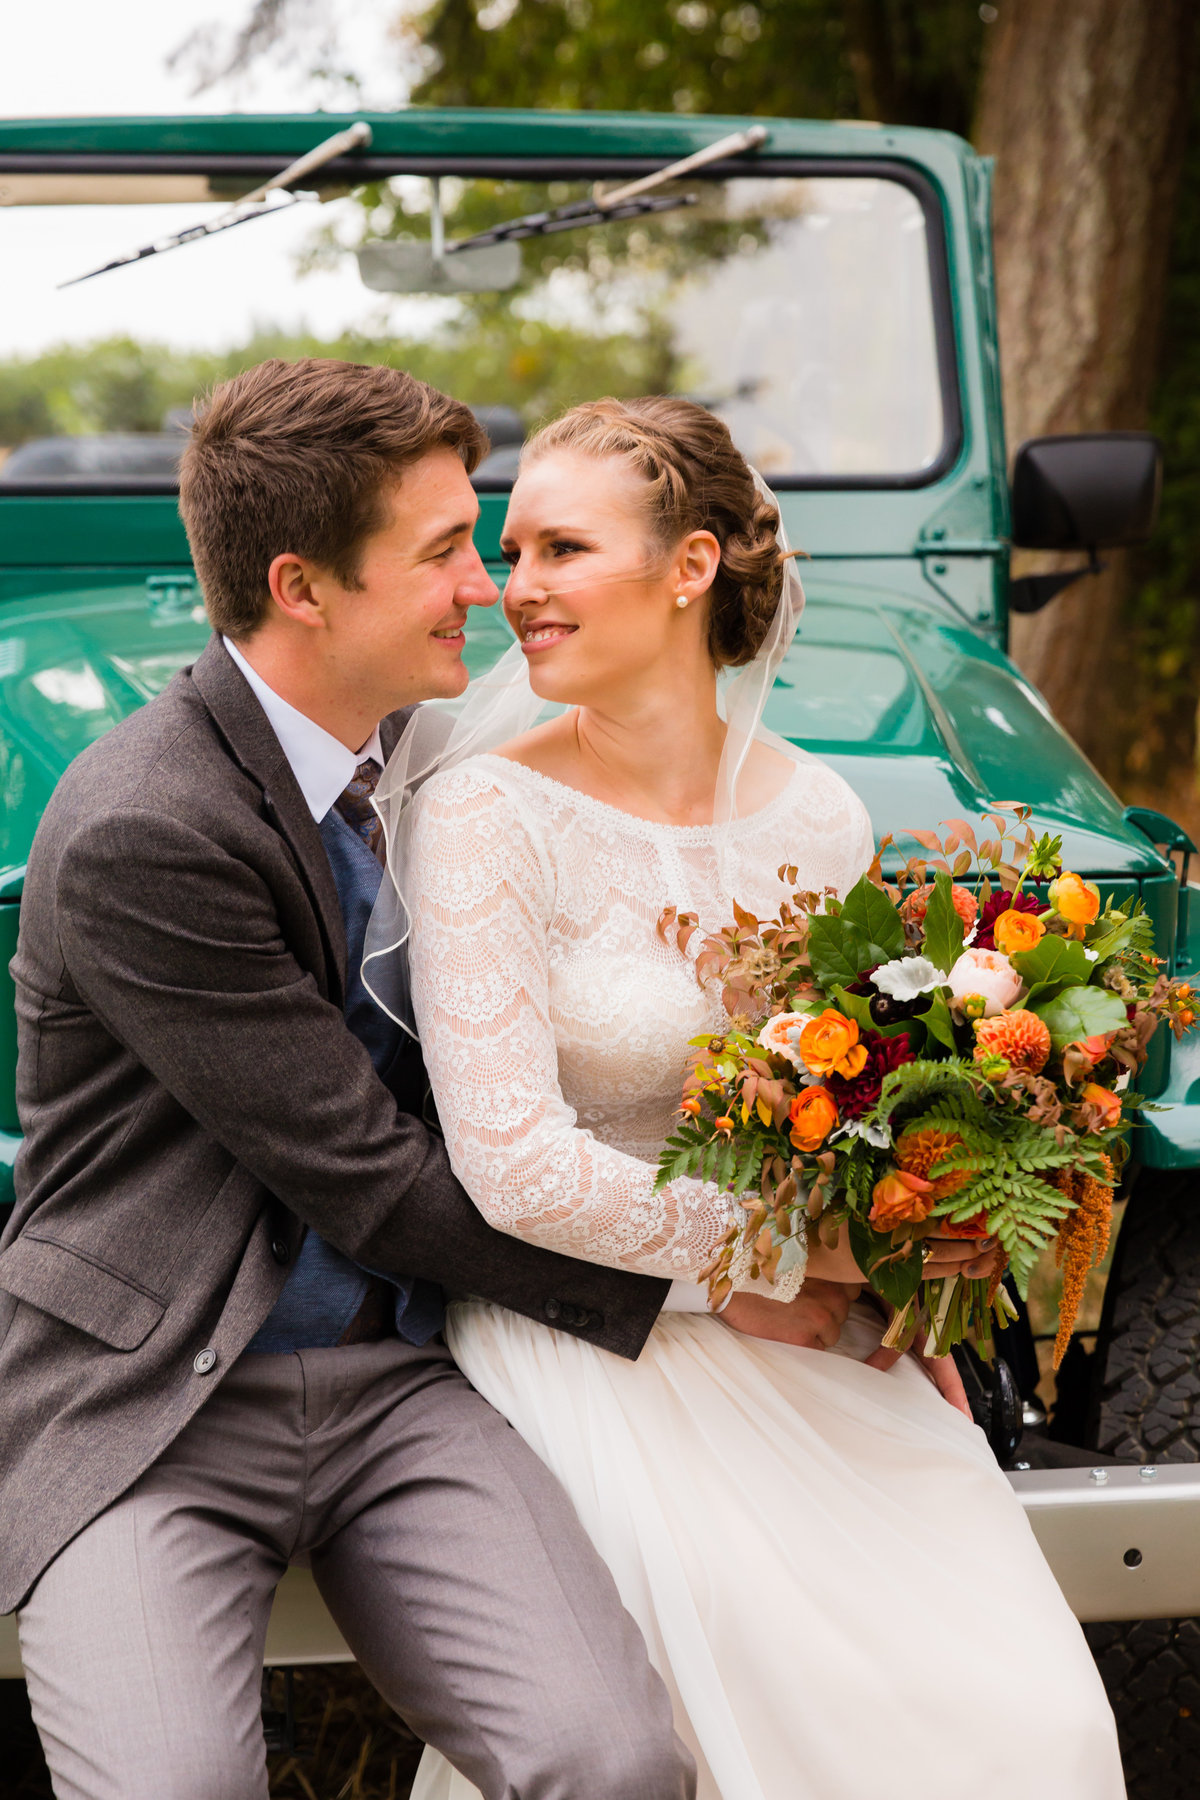 Outdoor Wedding Bride Groom Adventure Country Field Couple Truck Jeep